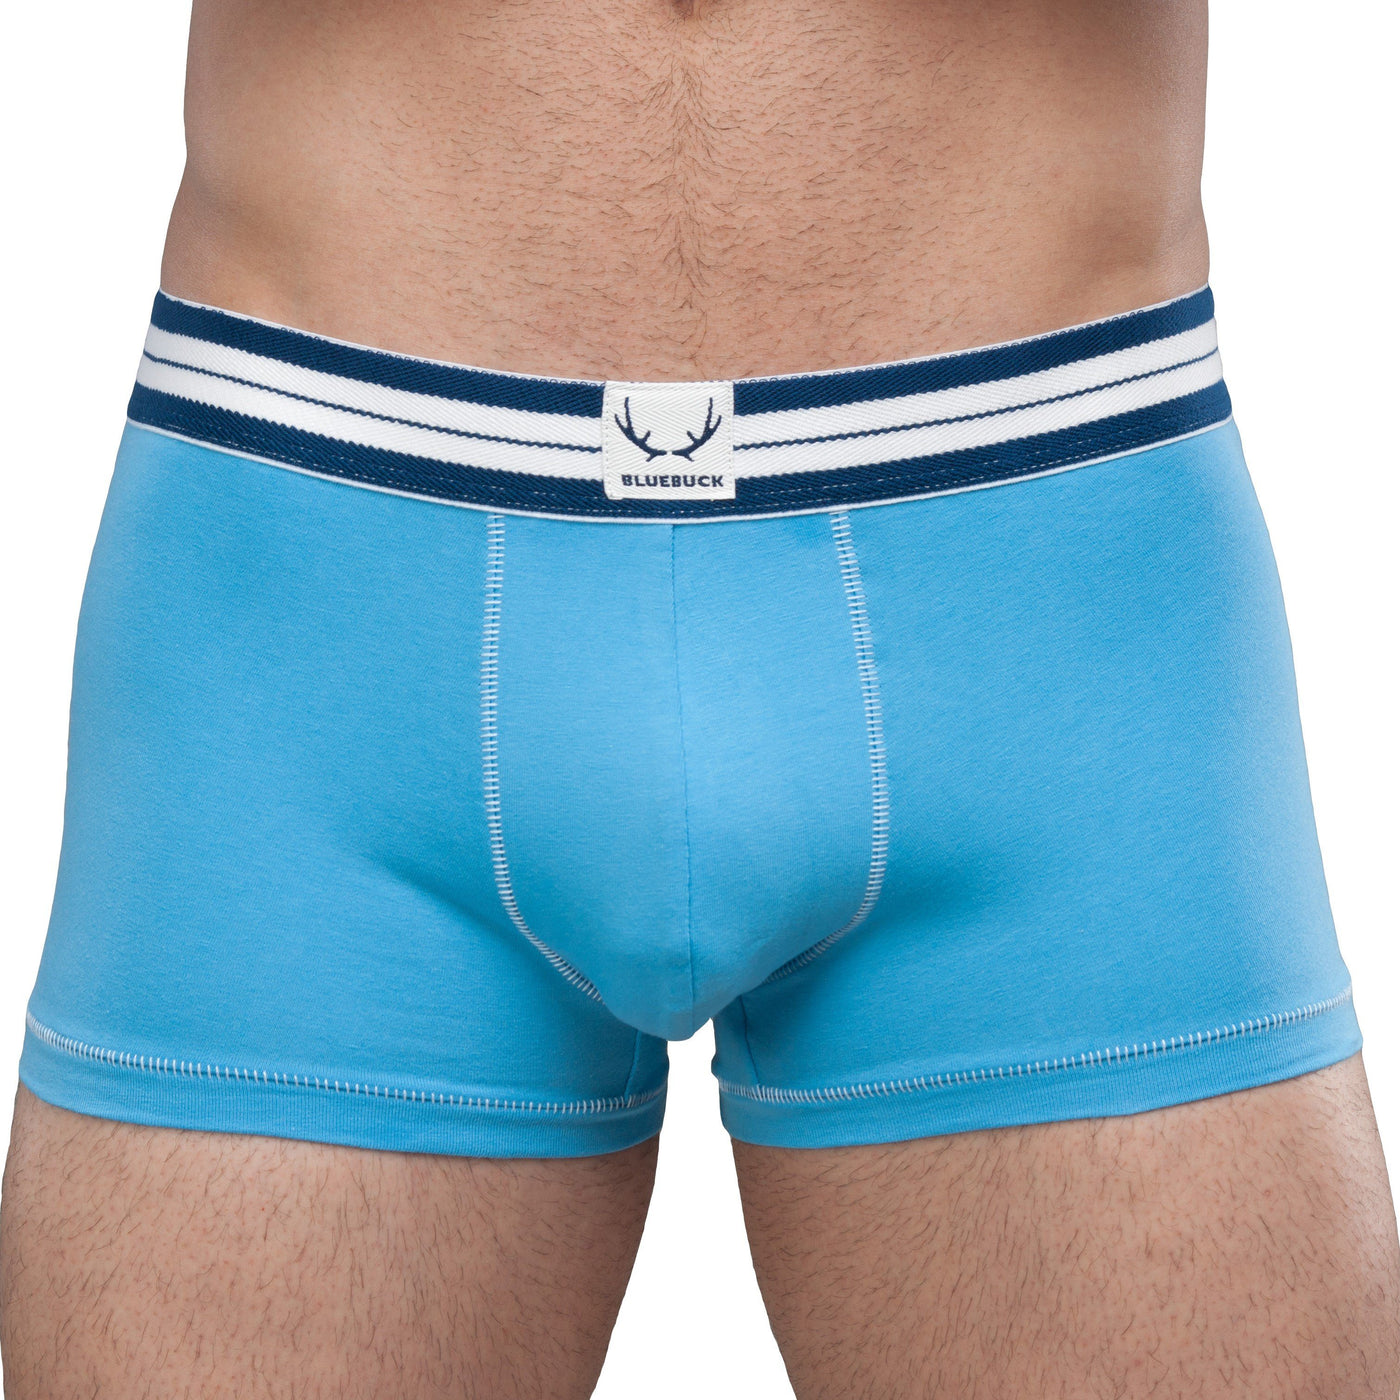 BLUEBUCK Classic Trunks Men's Underwear Sky Blue - Activemen Clothing